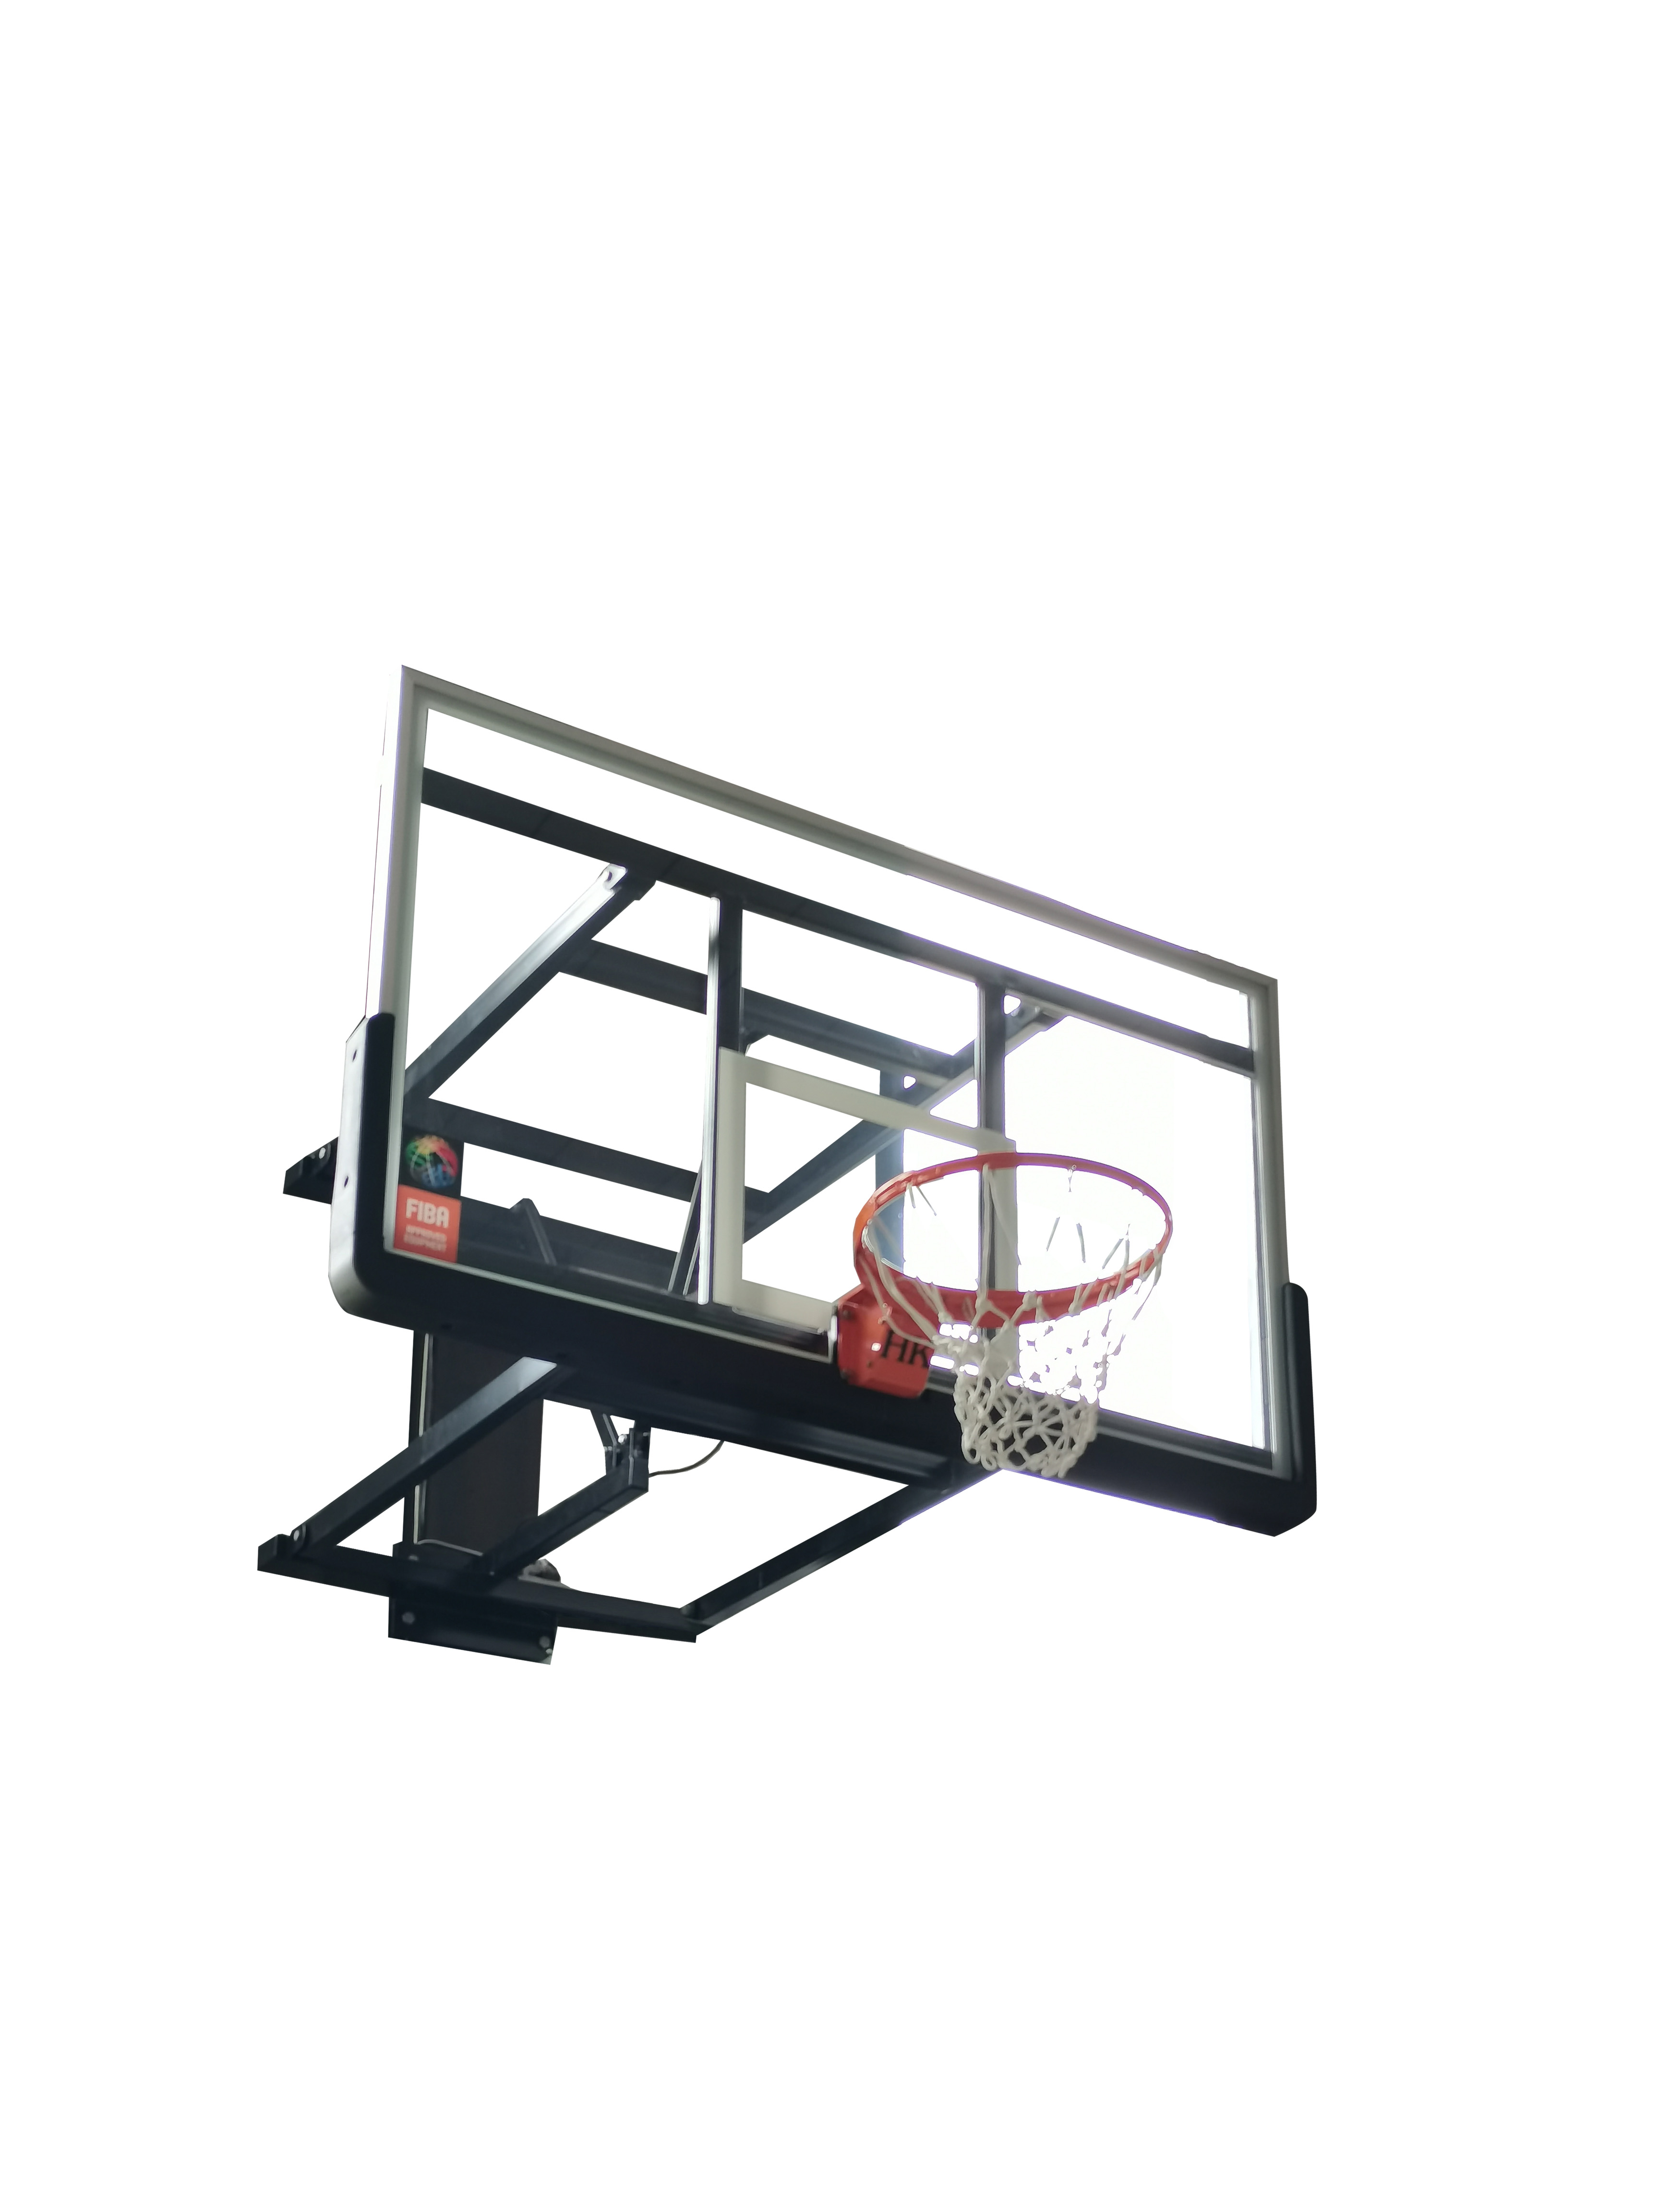 HKXB-1009 牆面電動升降成人籃球架.jpg